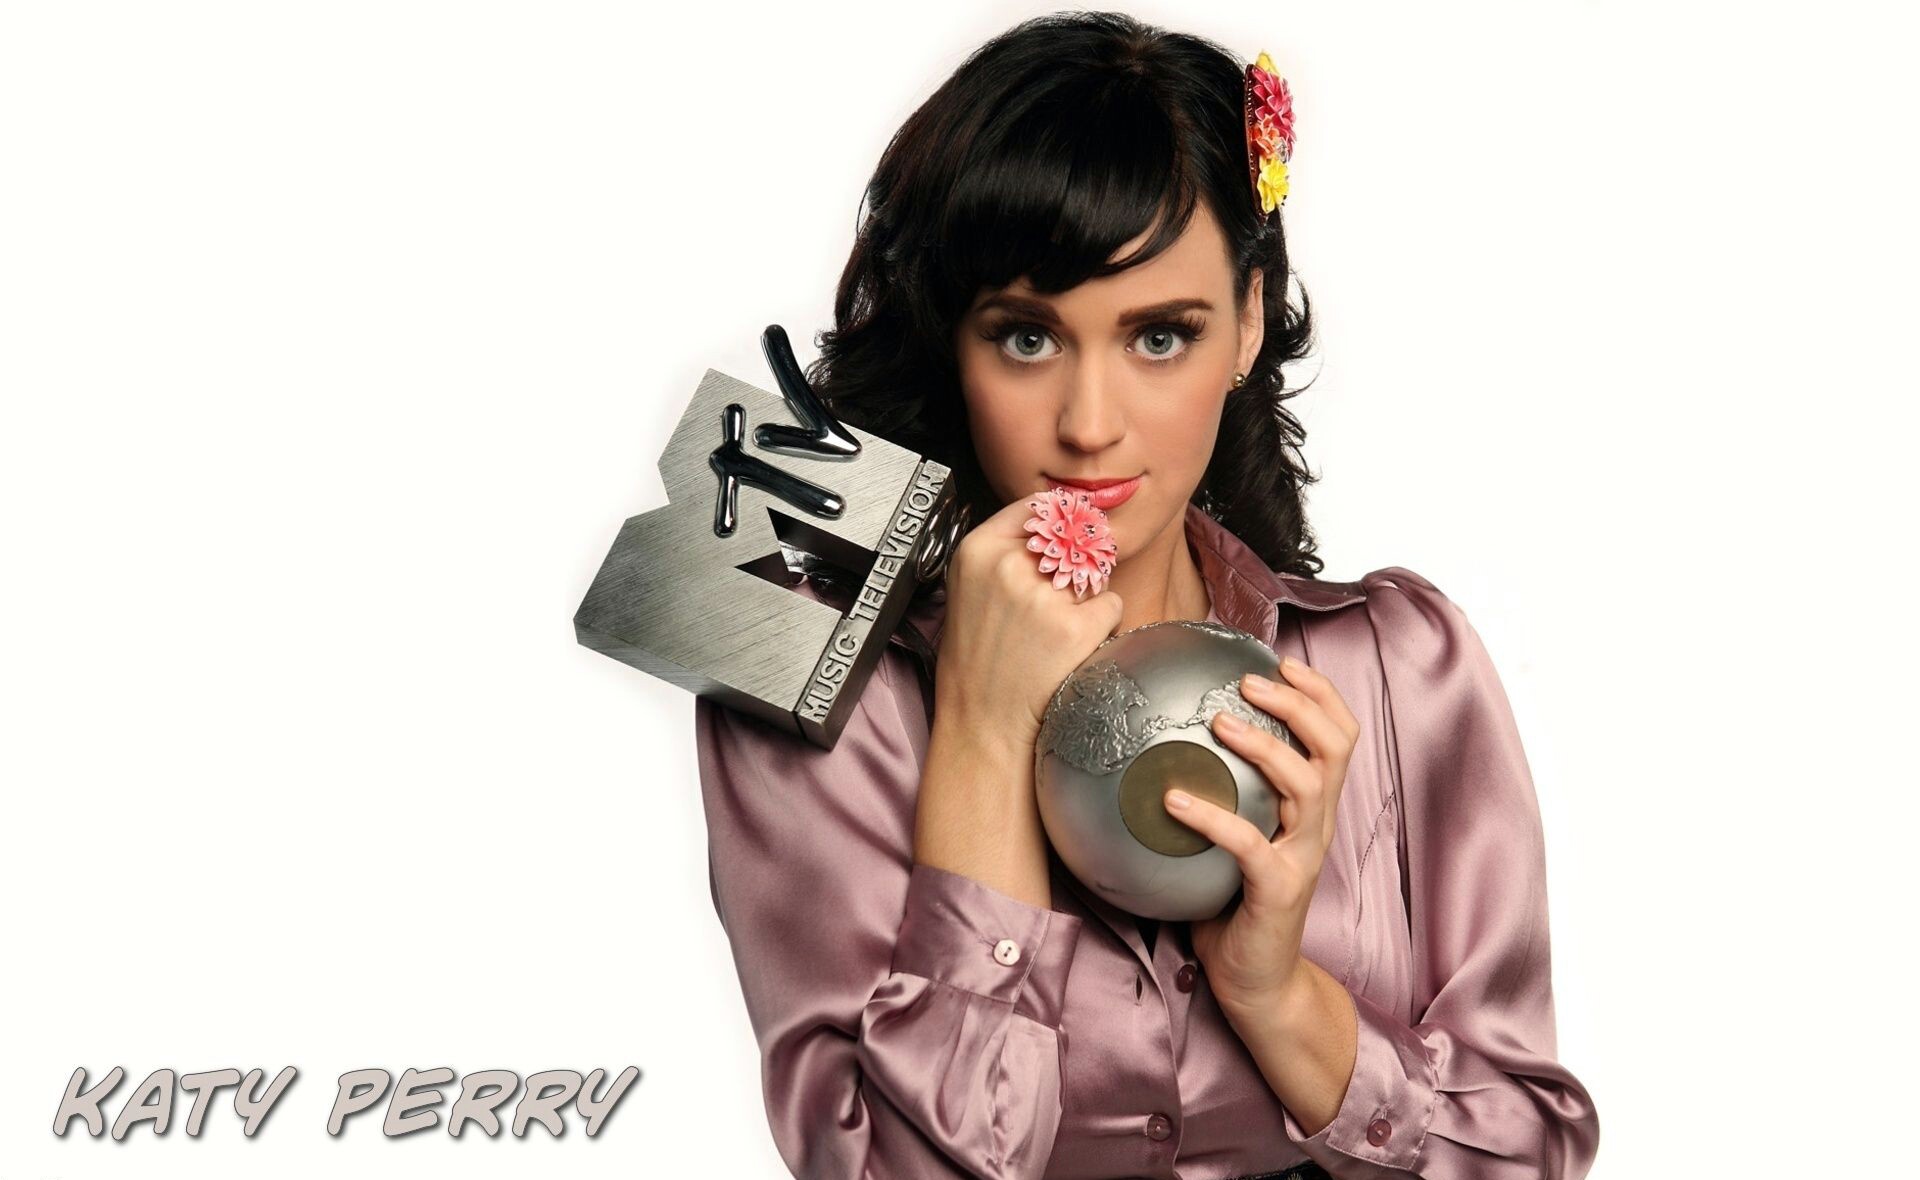 Katy Perry Wallpaper 4